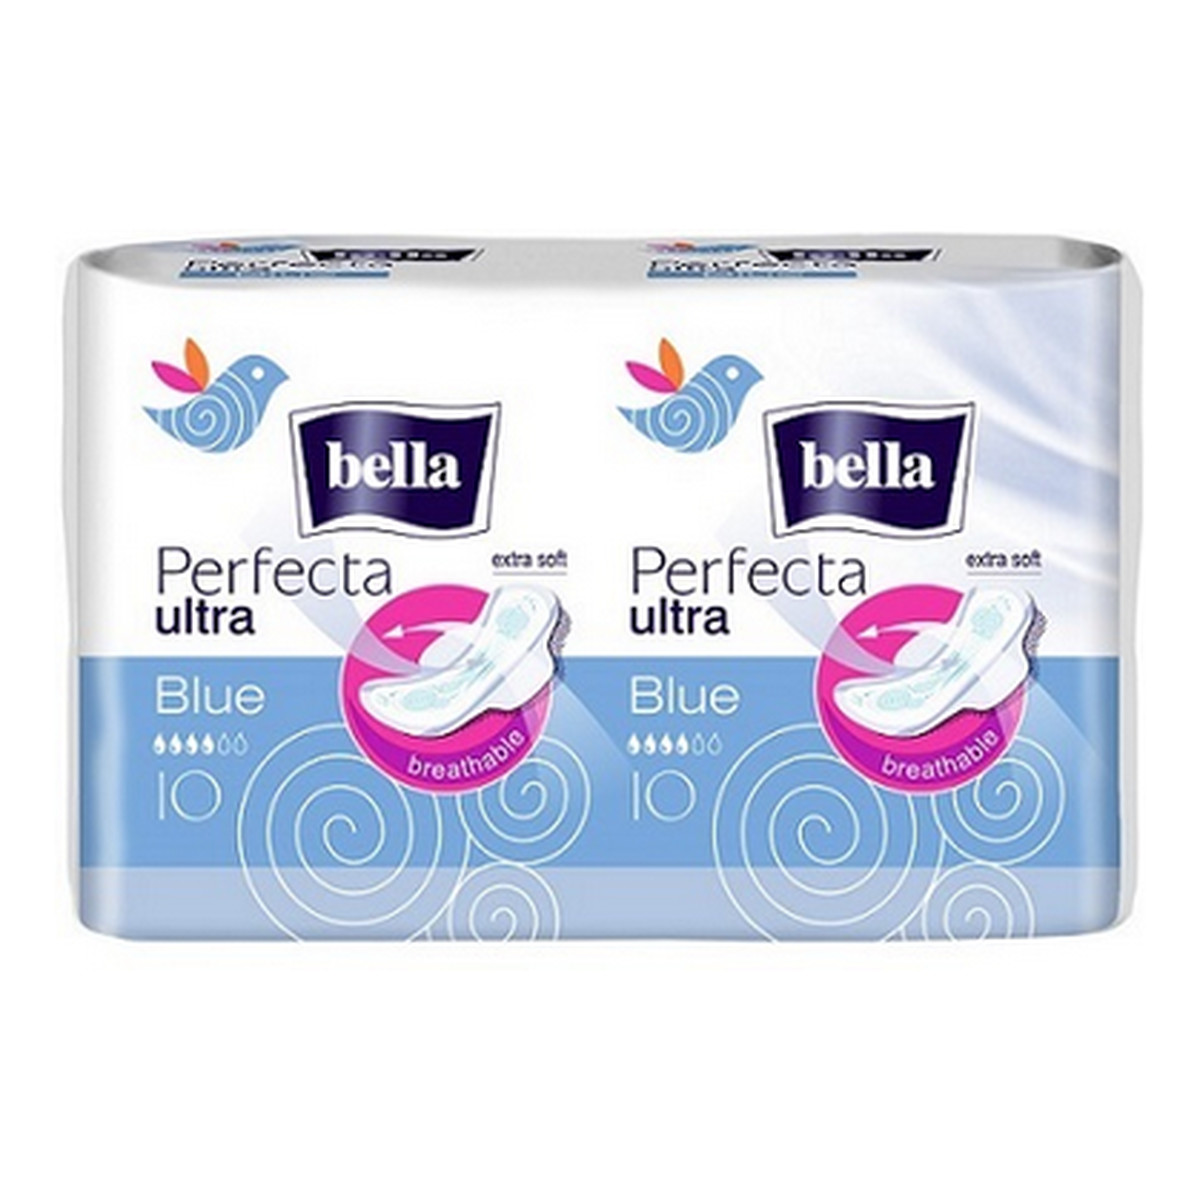 Bella Ultra Blue Perfecta Podpaski Higieniczne 10 + 10 Gratis